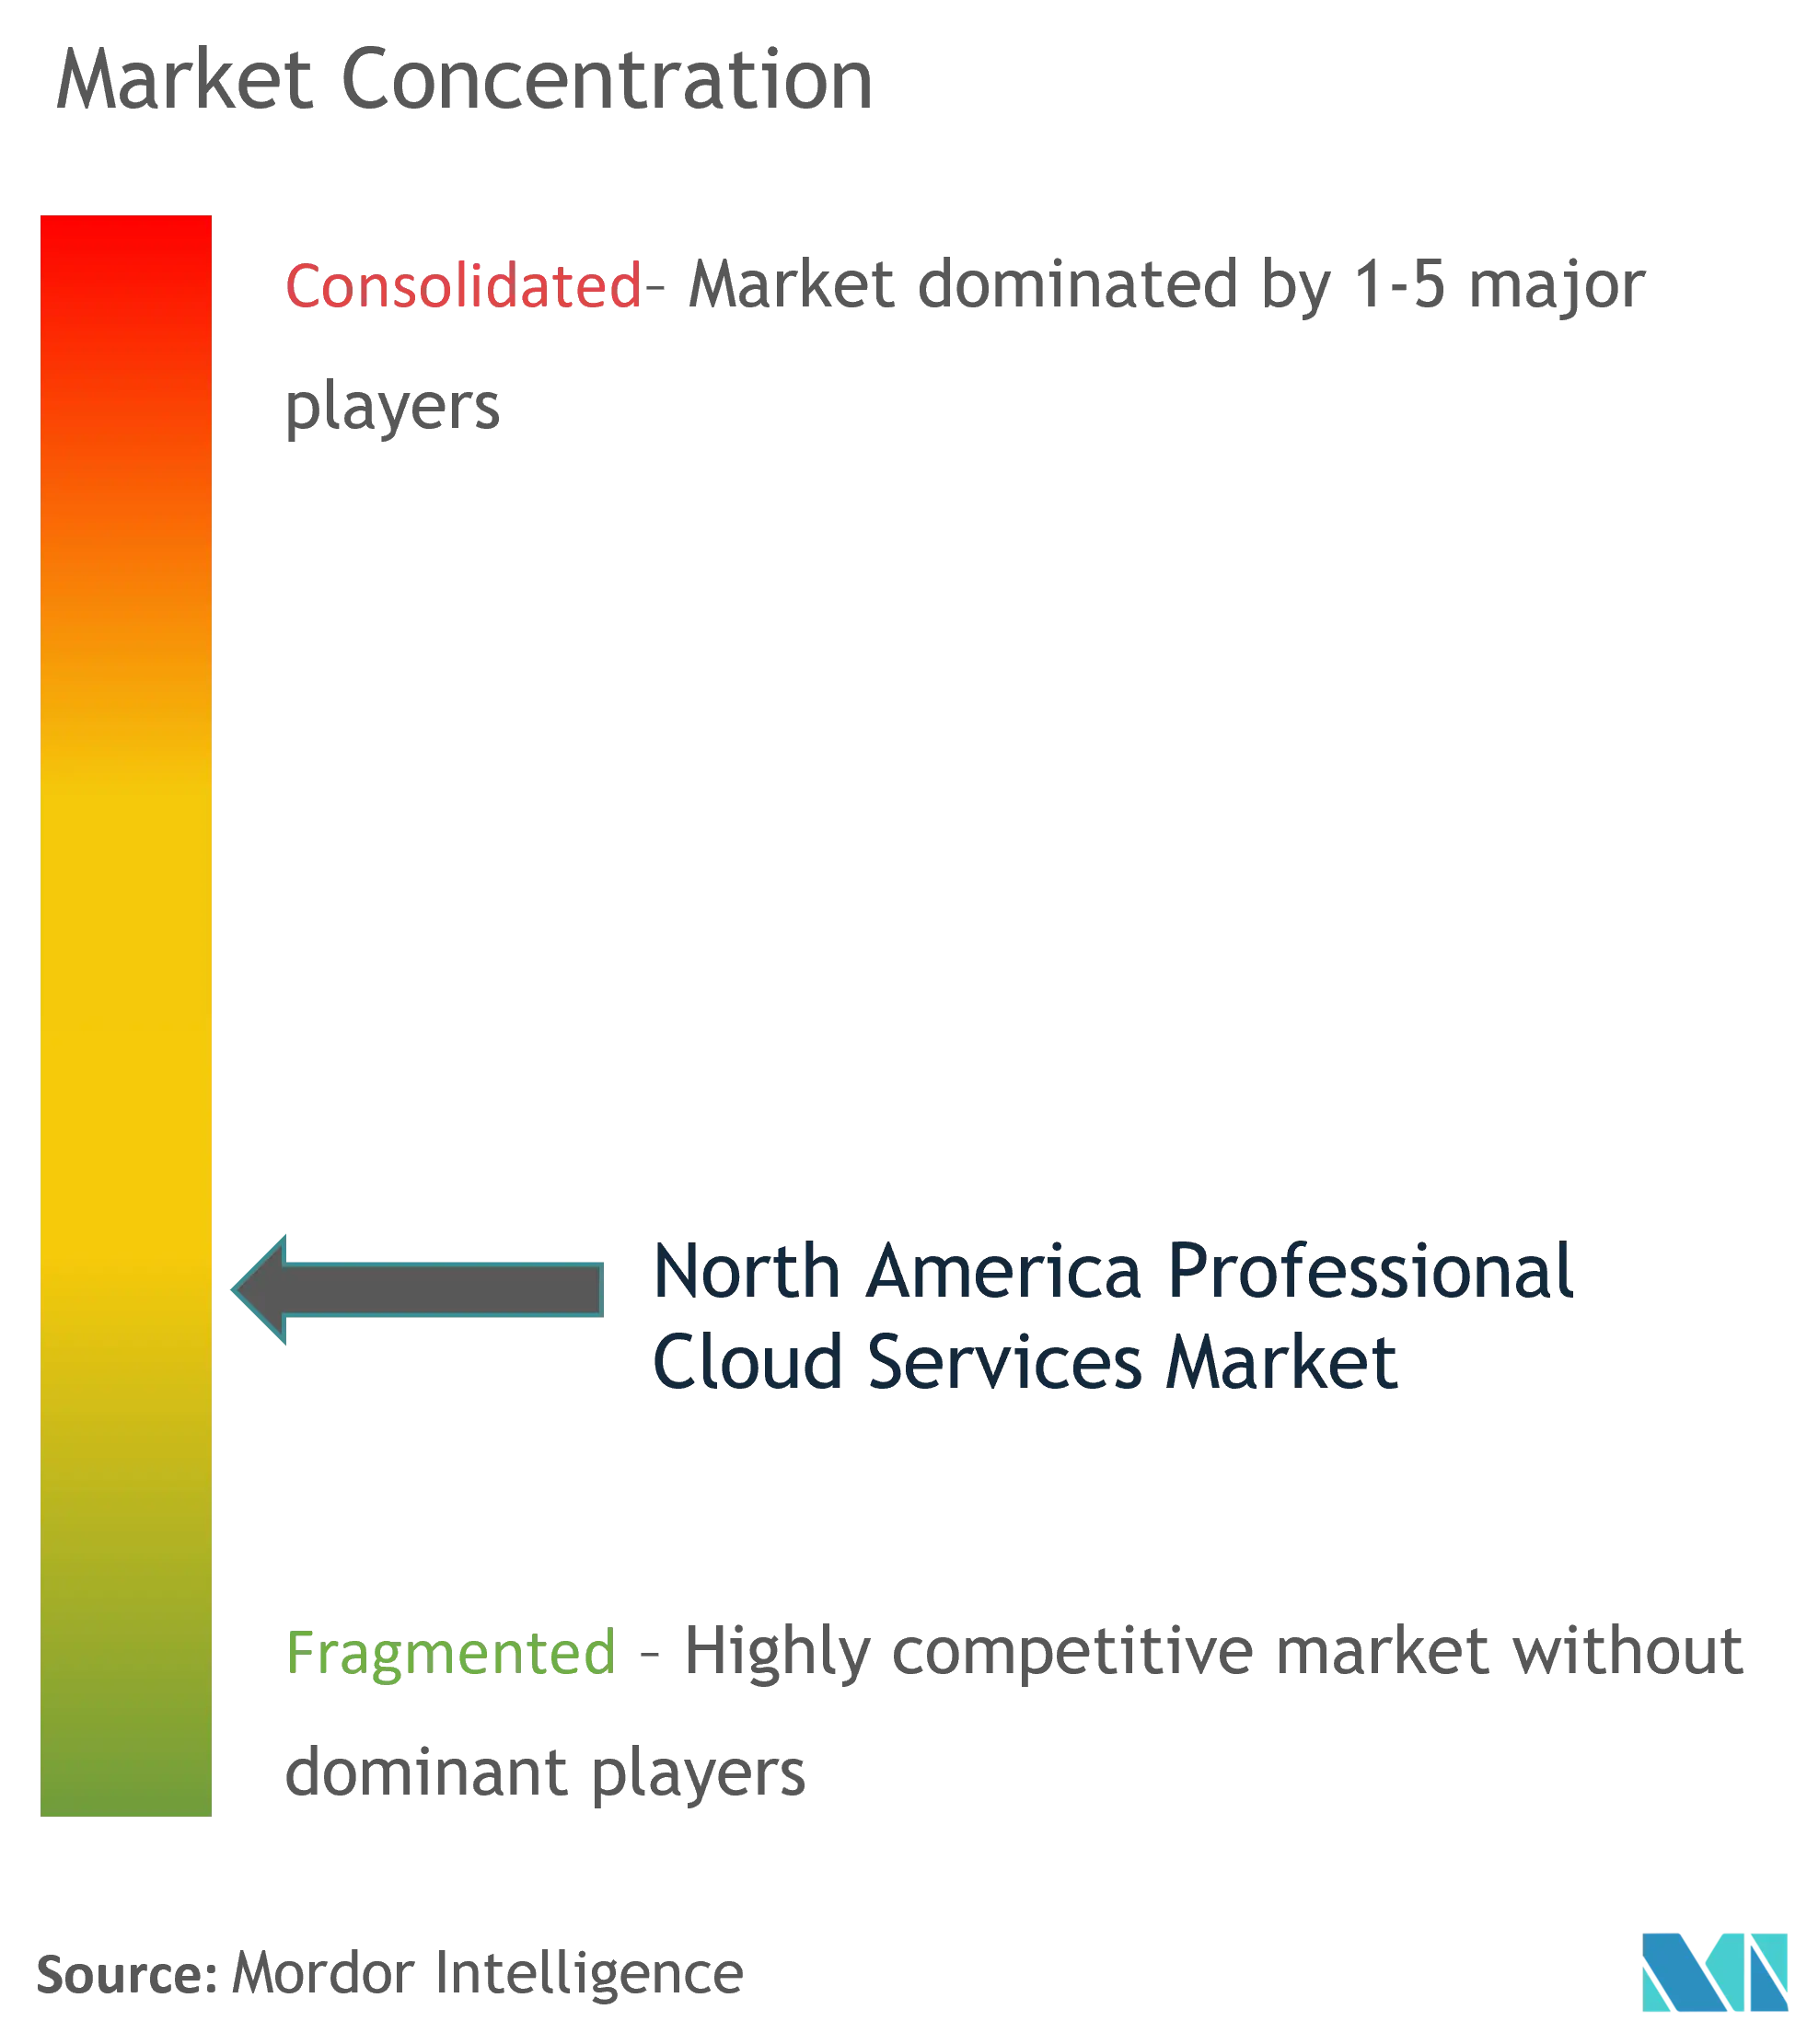 North America Professional Cloud Services Market - Market Concentration